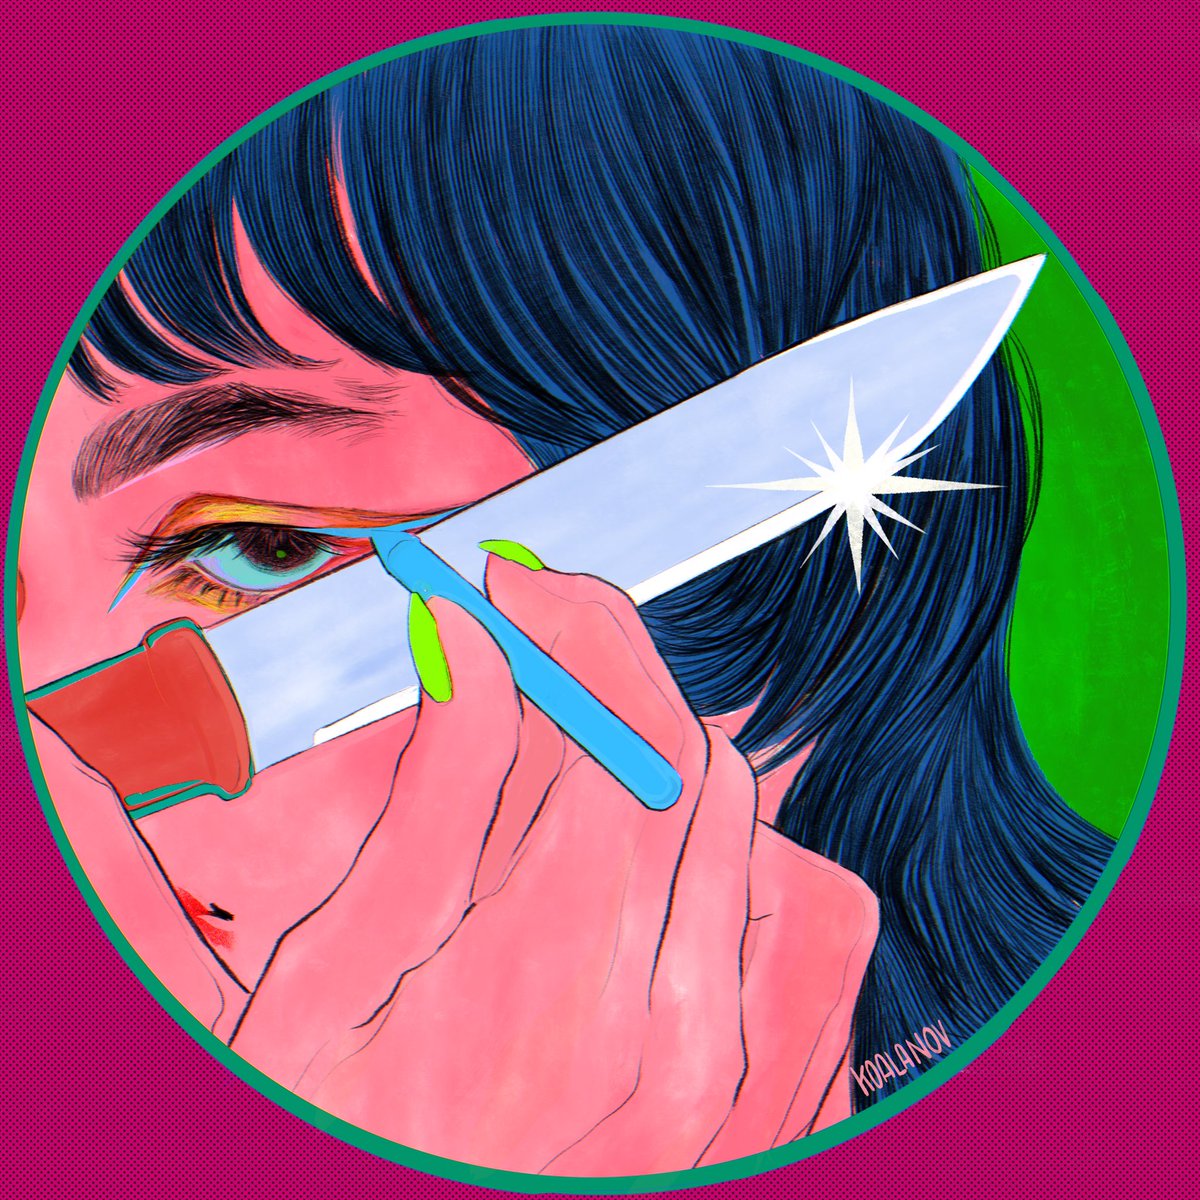 「slay they said #artph 」|koalanov 🔪 day3 stickerconのイラスト